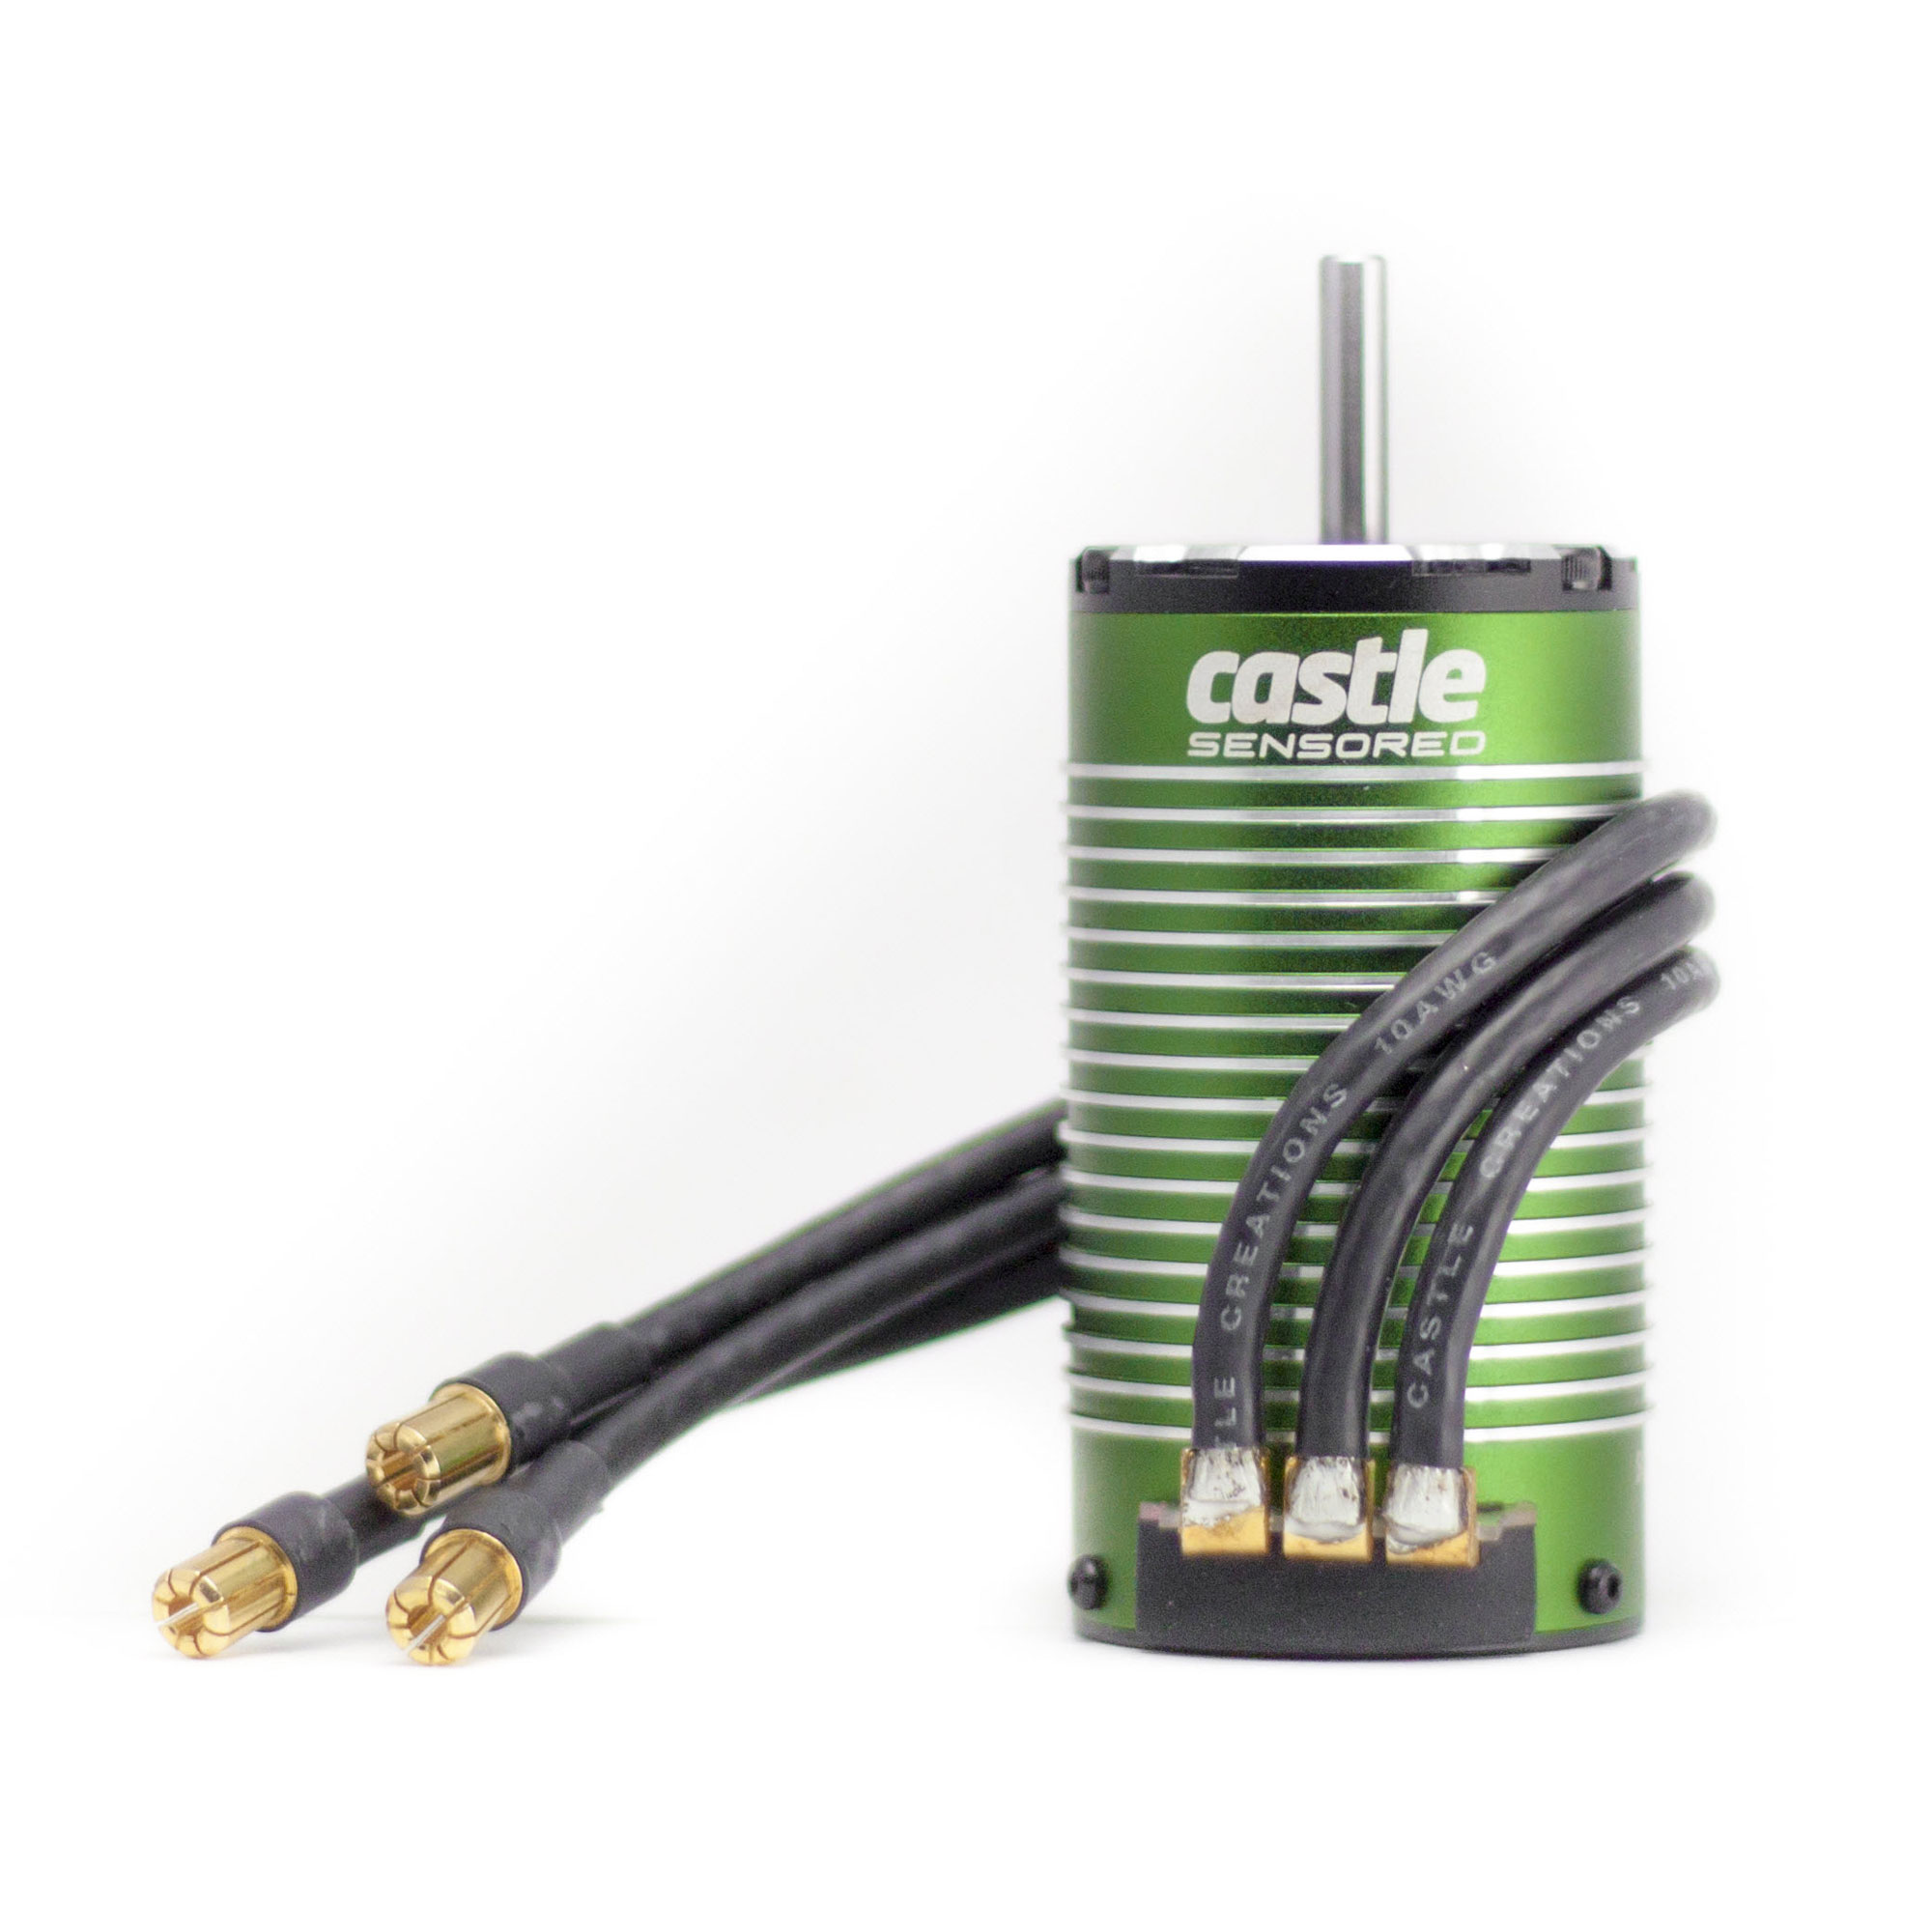 High Performance Cooling Fan For Castle 1515 2200KV 1/8 Motors 011-0004-00 NIB 